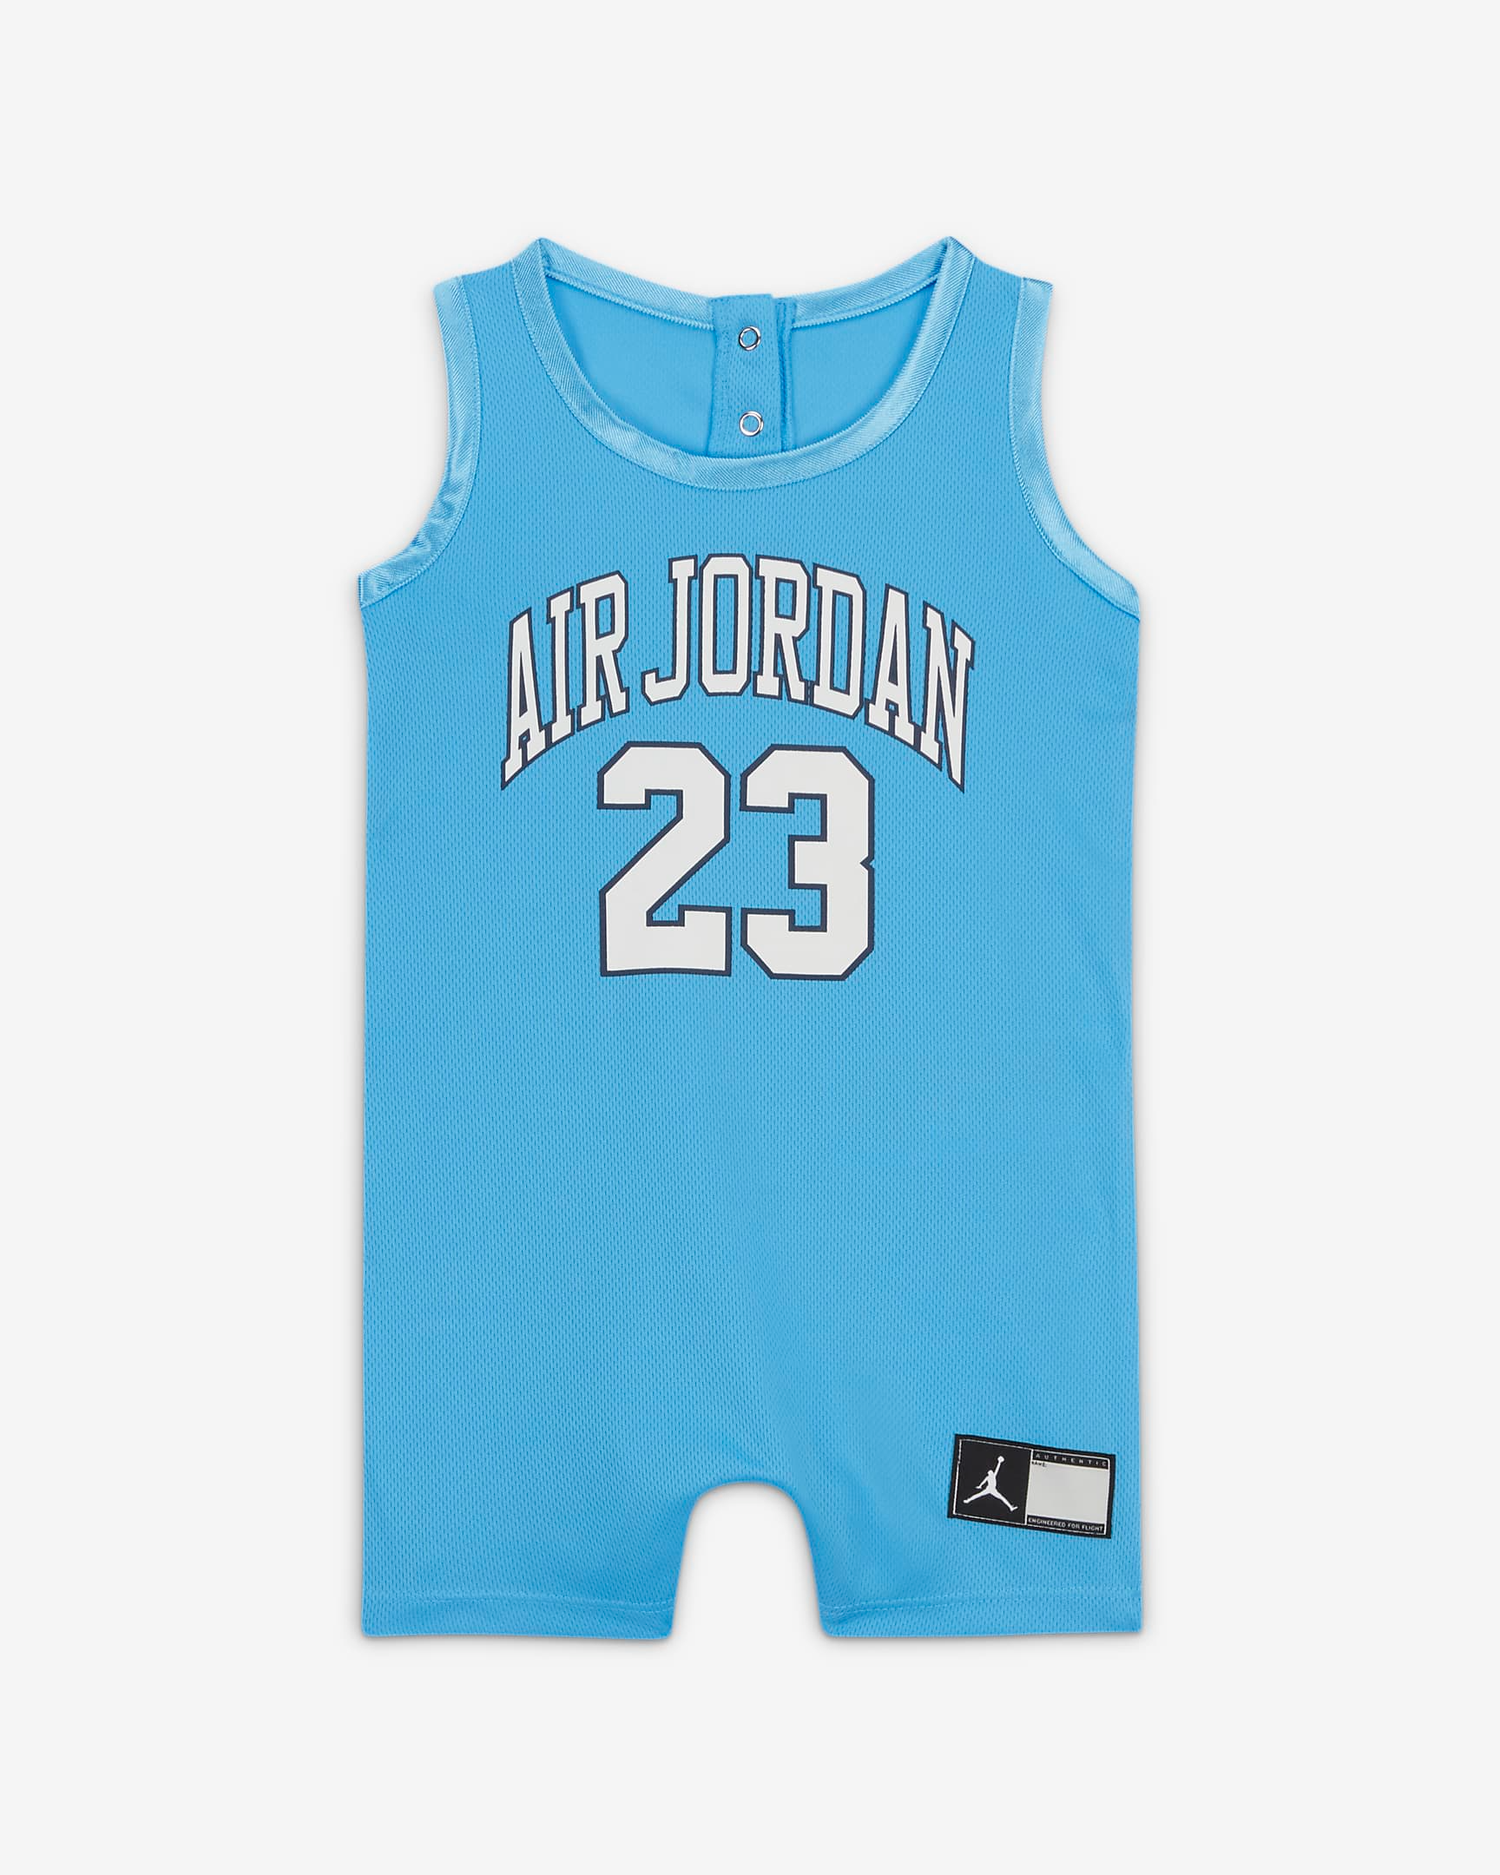 Now Available: Air Jordan Baby Romper 